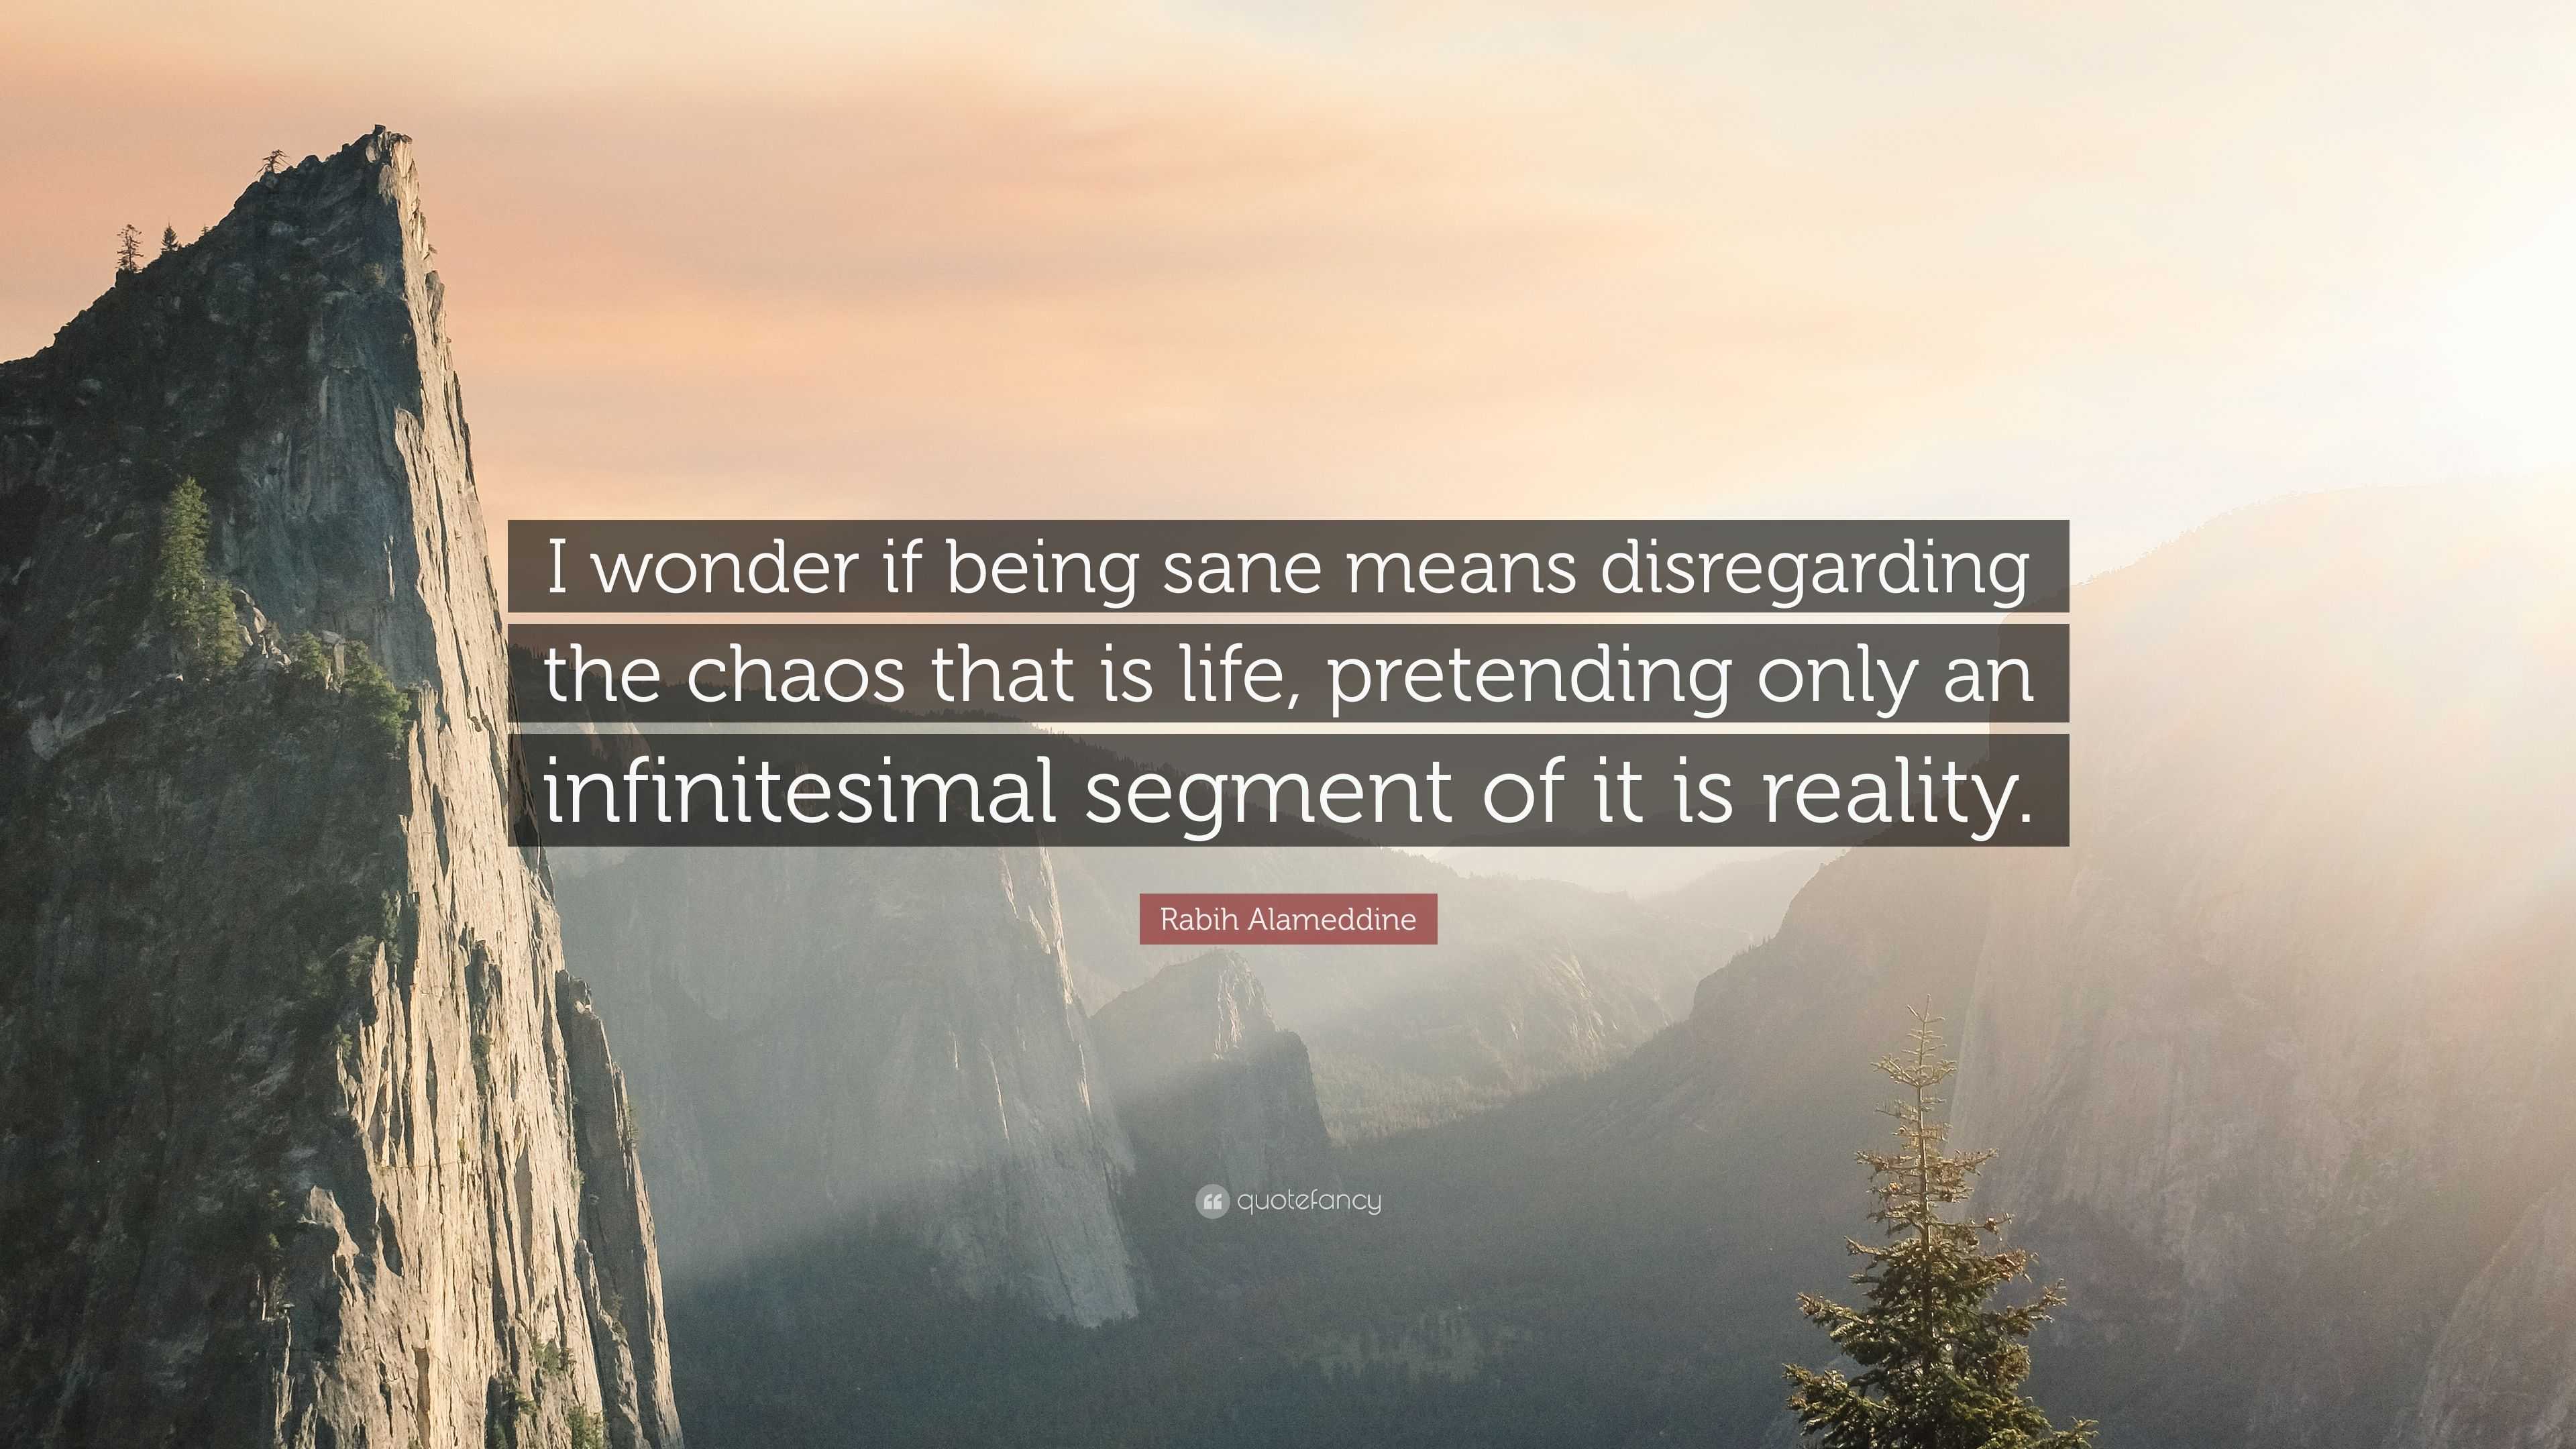 Rabih Alameddine quote: I wonder if being sane means disregarding